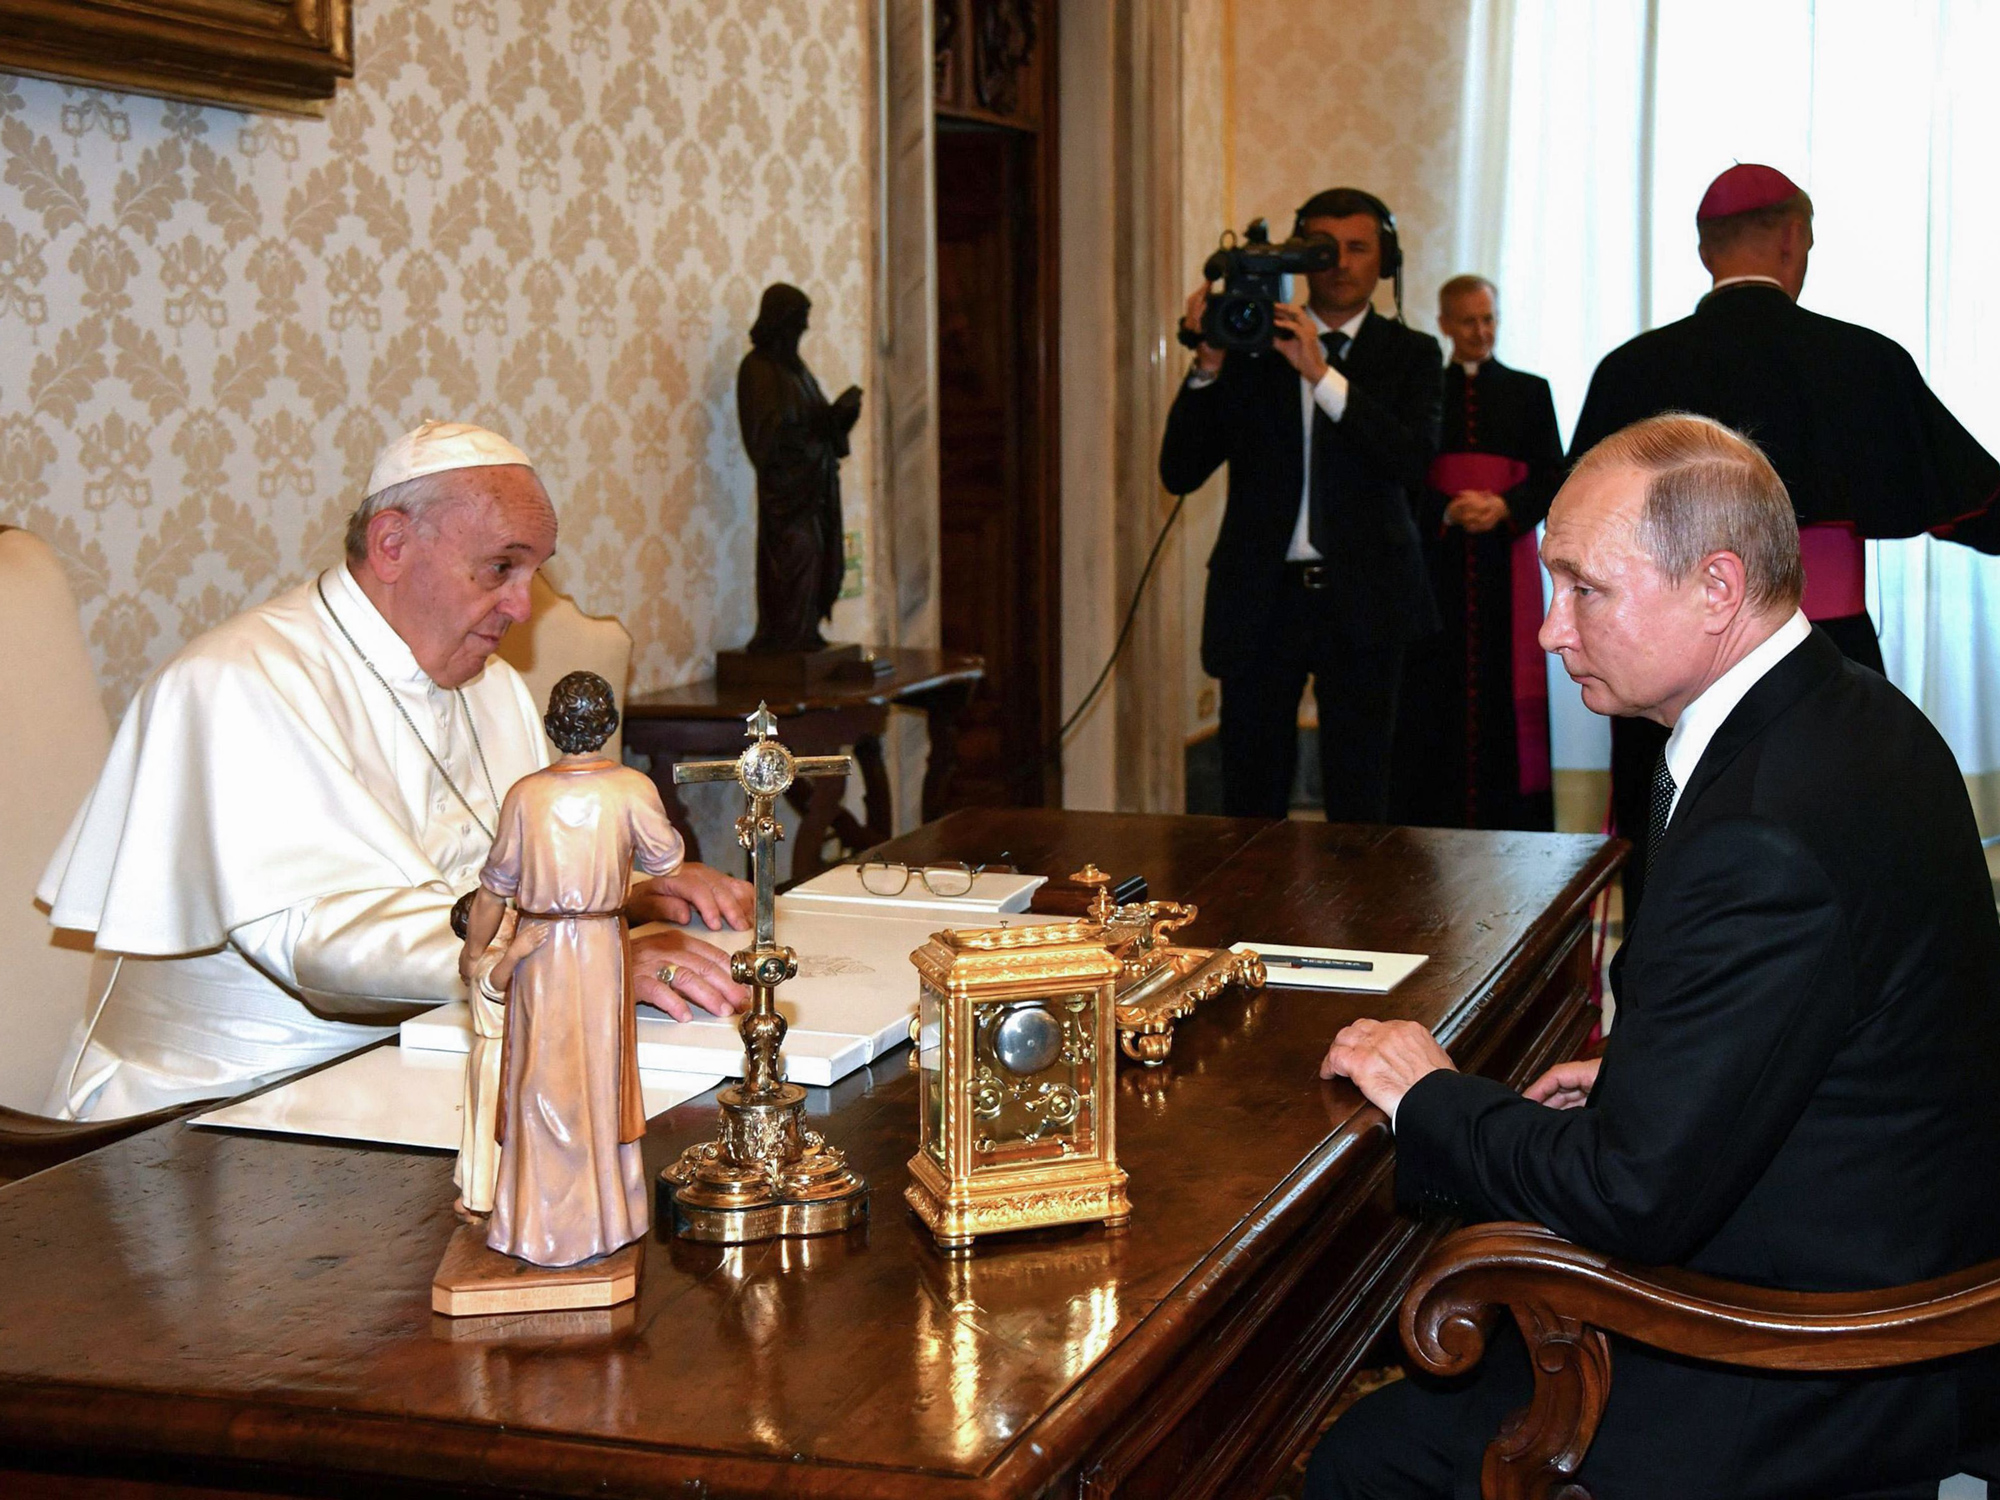 uudgrundelig Jane Austen Palads Putin Meets Pope as Relations Thaw Between Russia and Vatican - Bloomberg